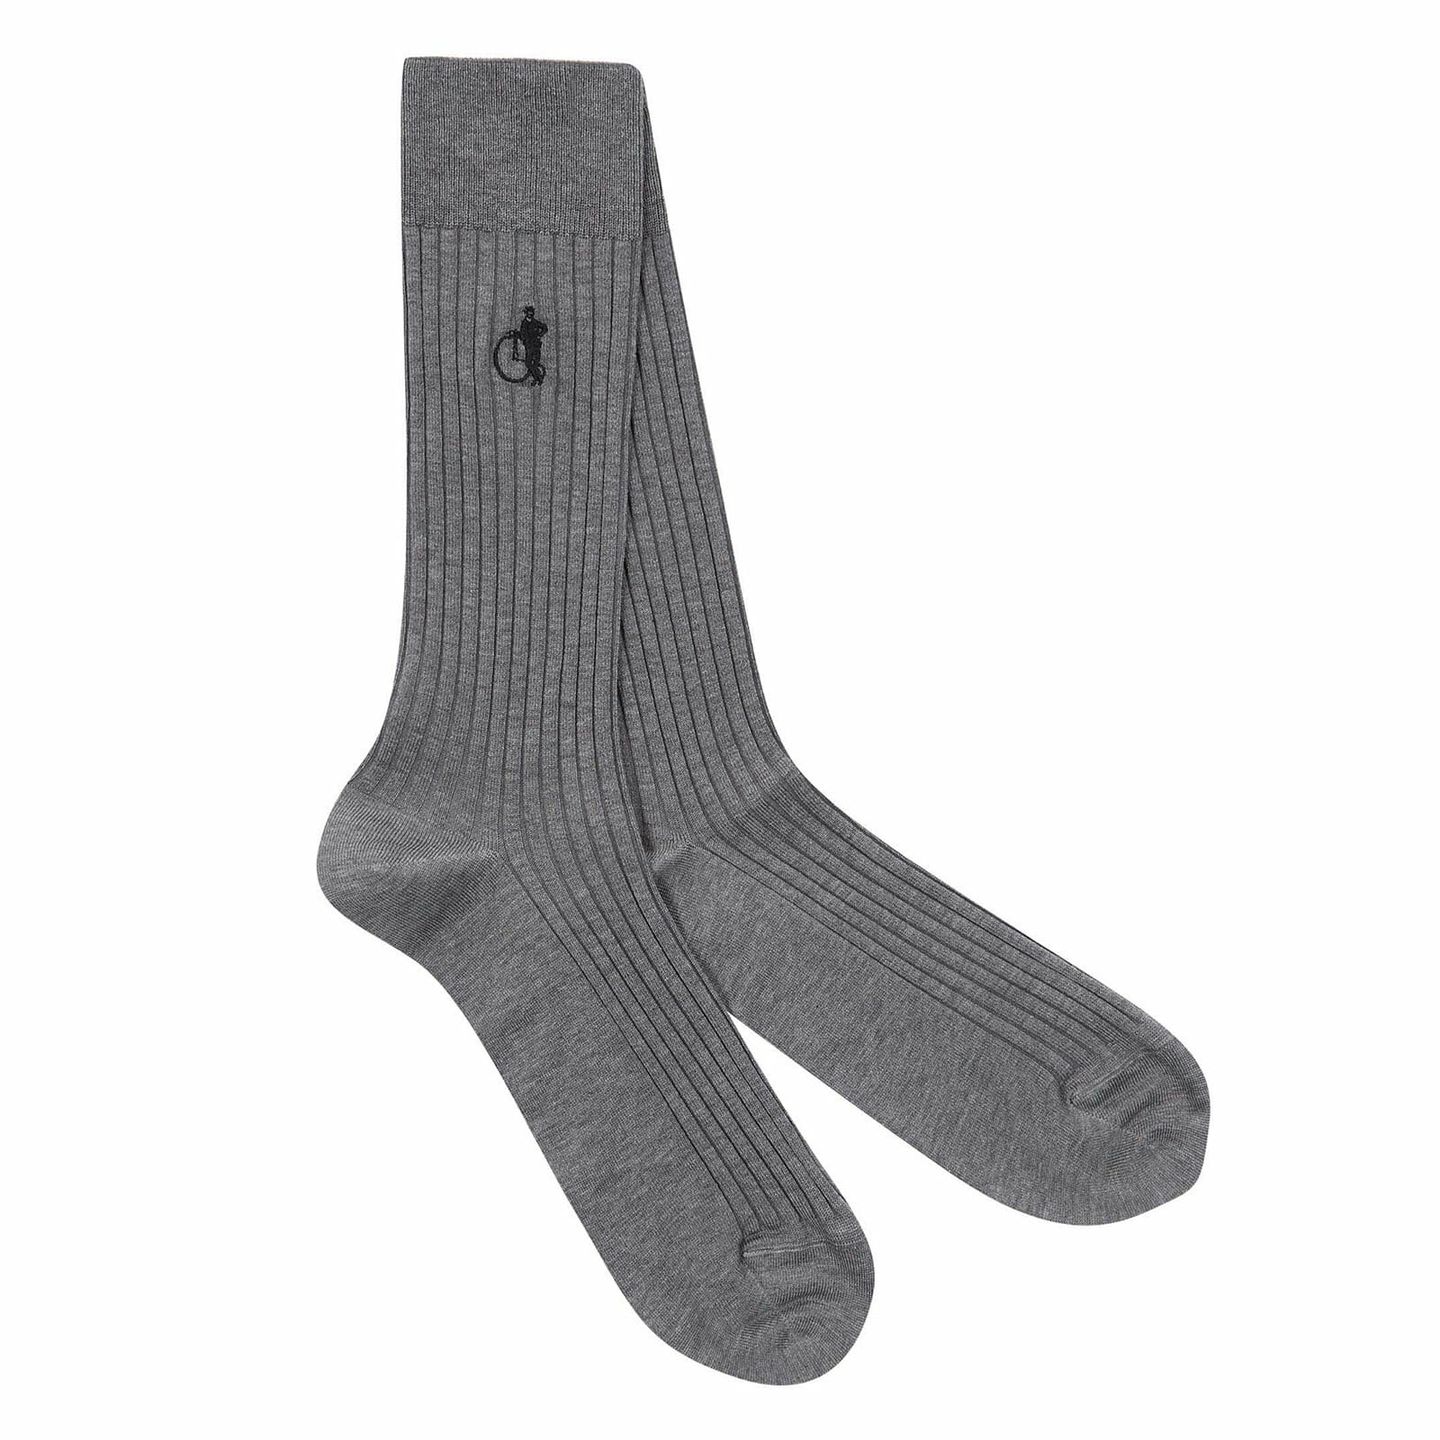 Pair of simply sartorial socks in earl grey